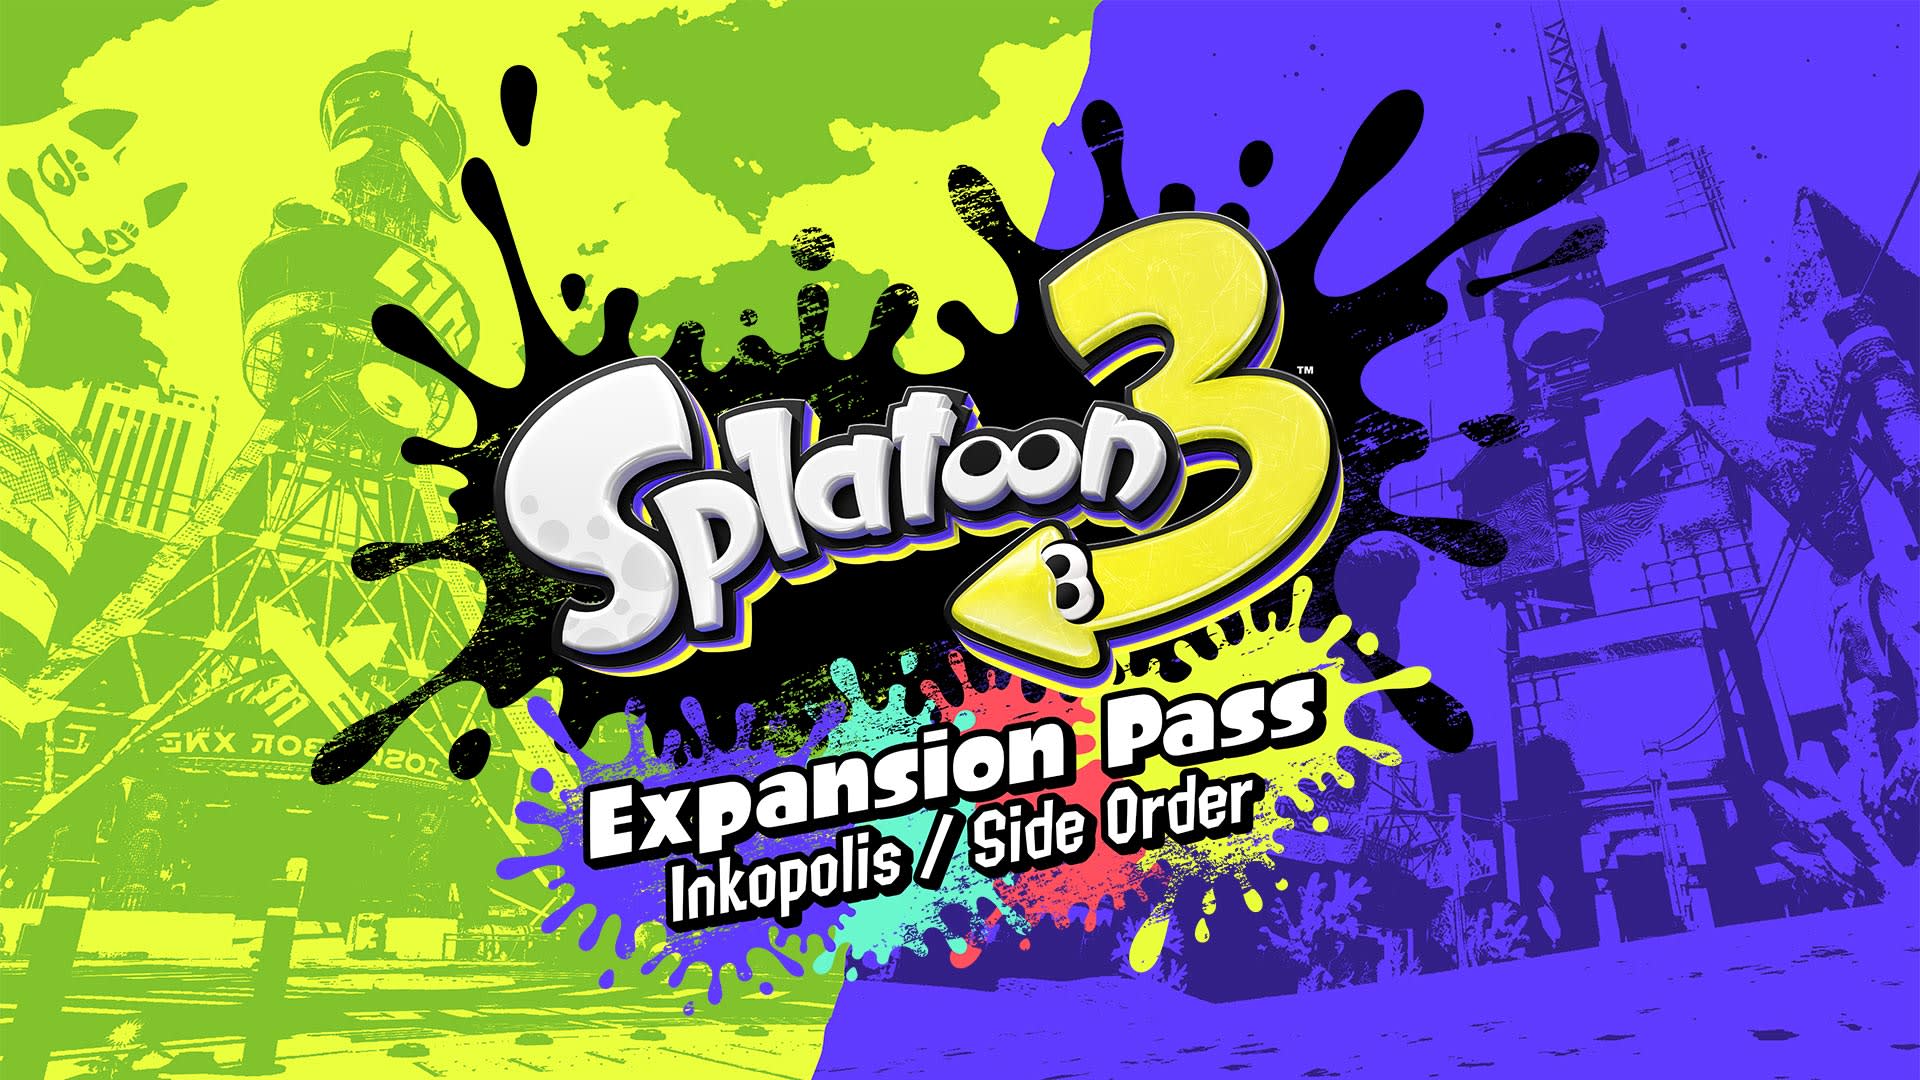 Splatoon™ 3 for Nintendo Switch - Nintendo Official Site